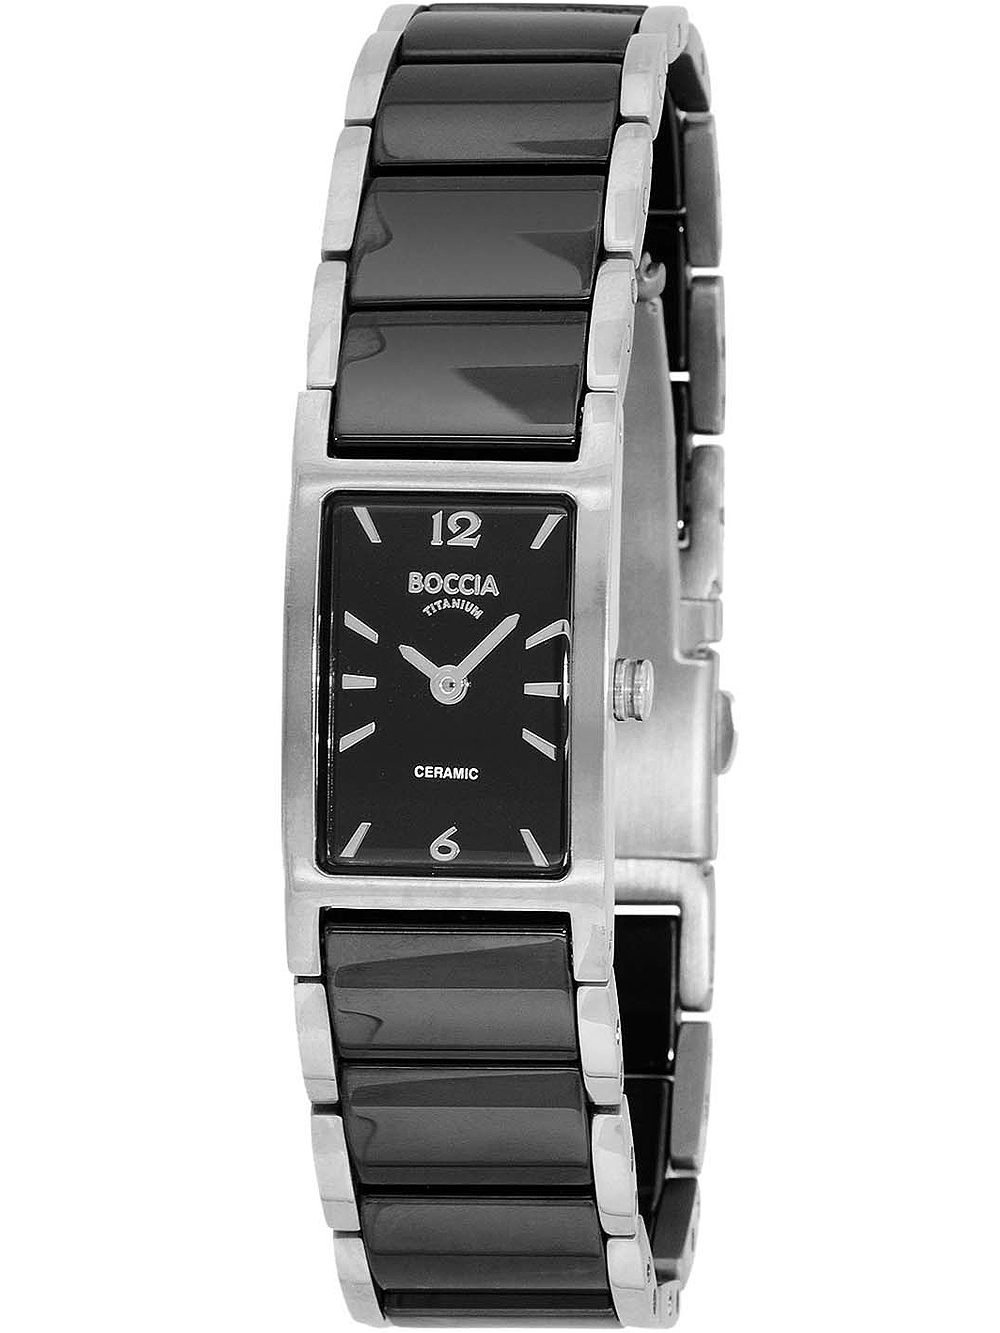 Dámské hodinky Boccia 3201-02 ceramic titanium